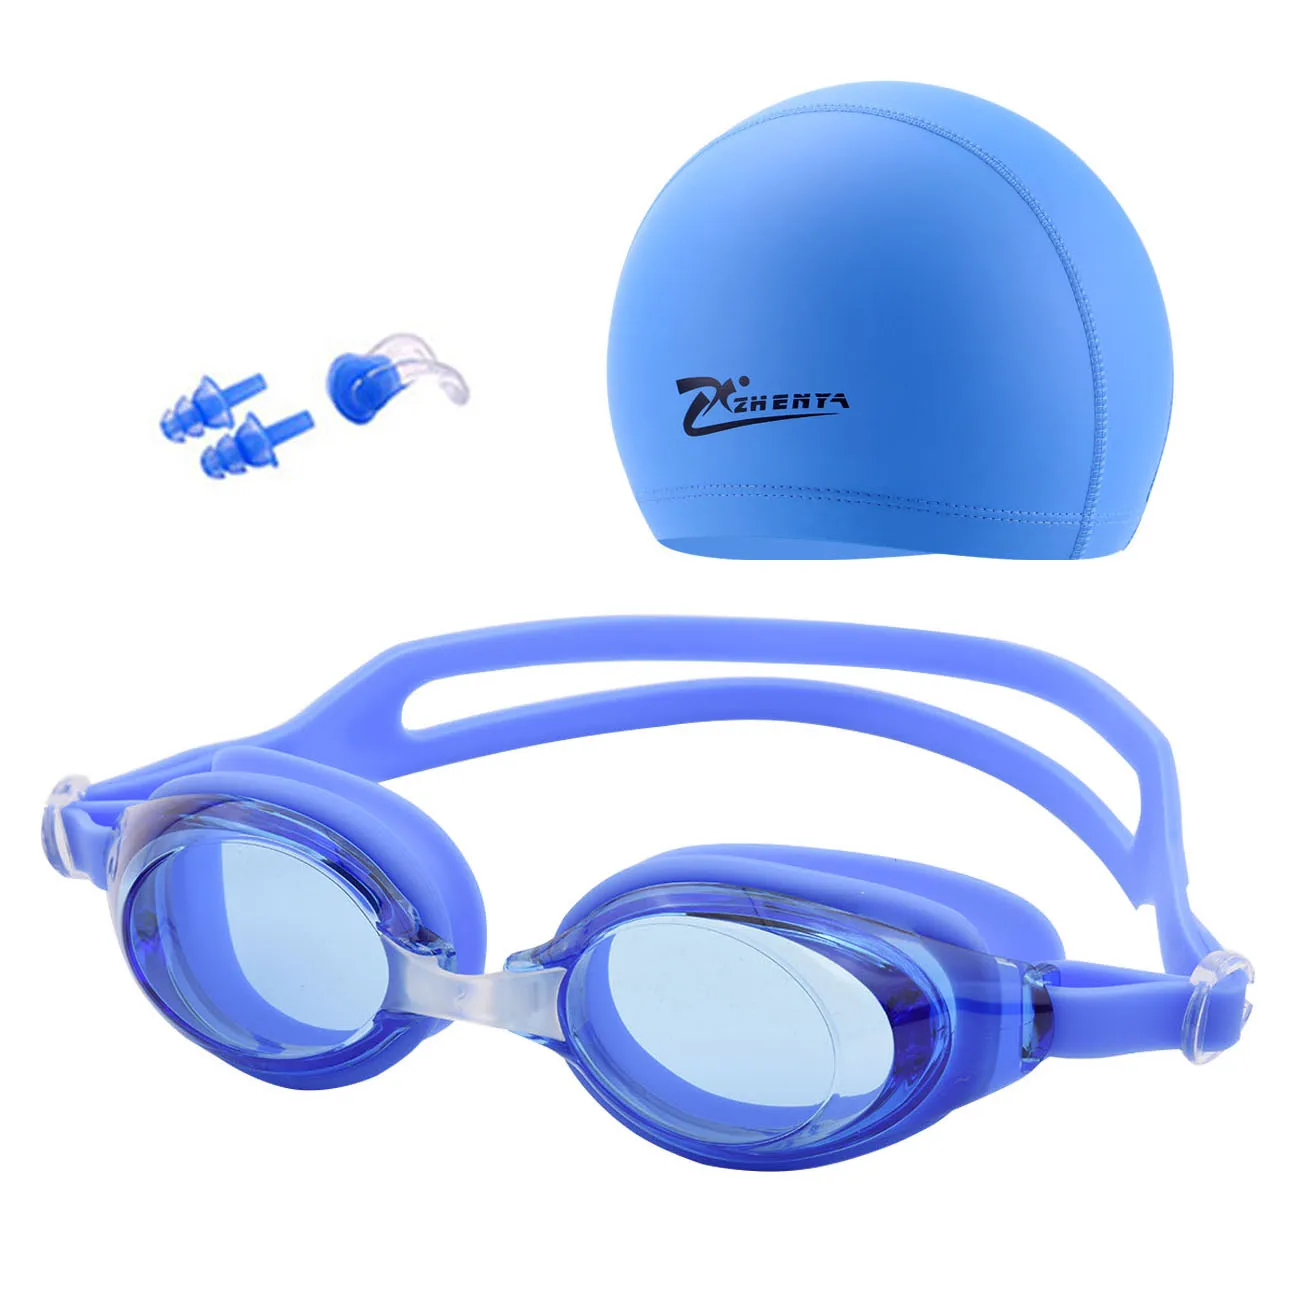 Swim Cap Glasses Anti-fog Waterproof Goggles Earplug Pool Equipment for Men Kids Women Adult Sports Diving Eyewear